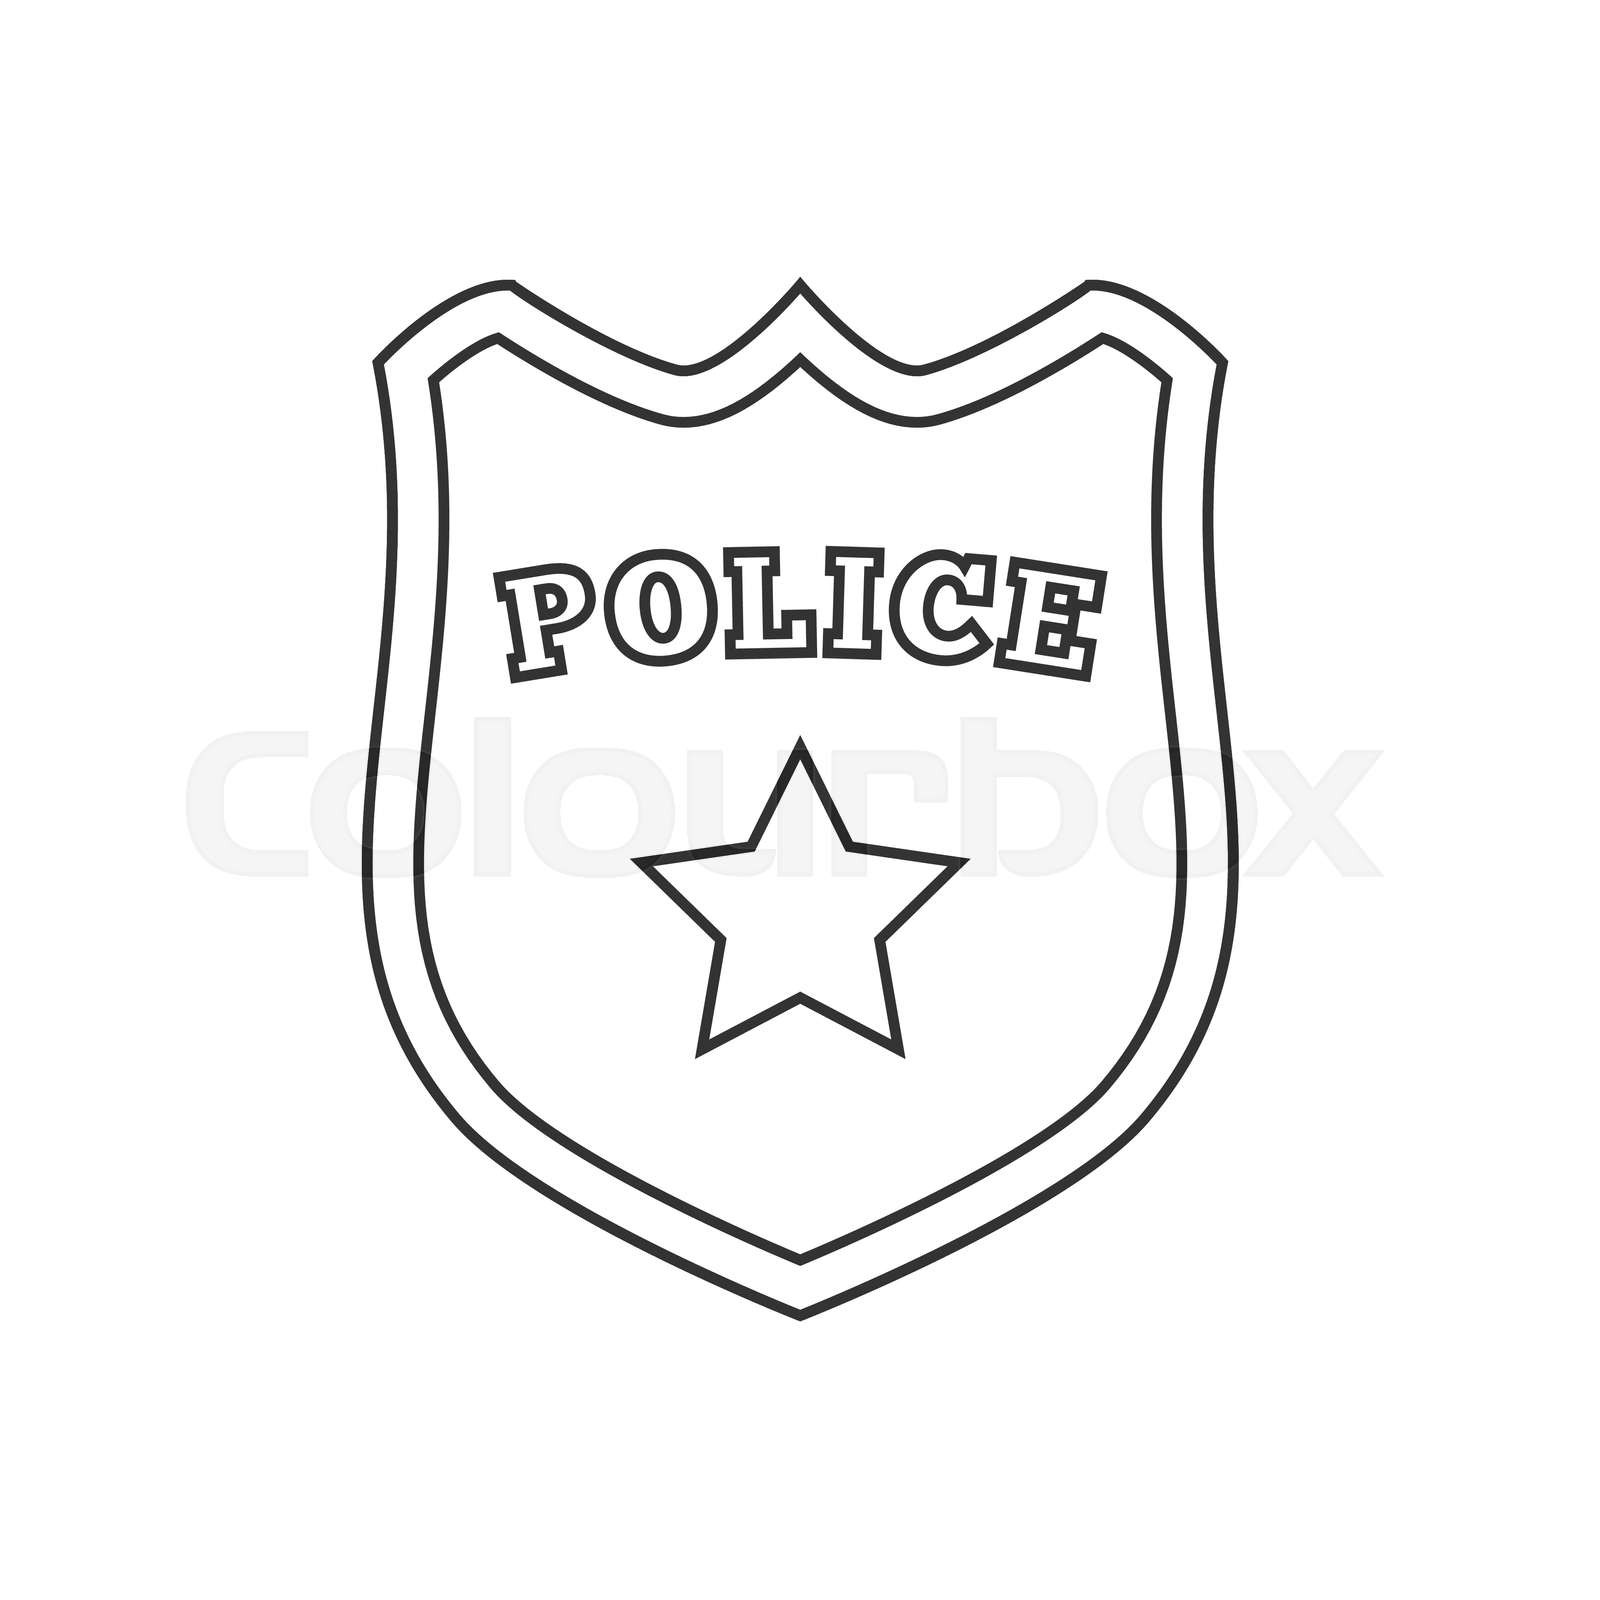 Police badge line icon stock vector